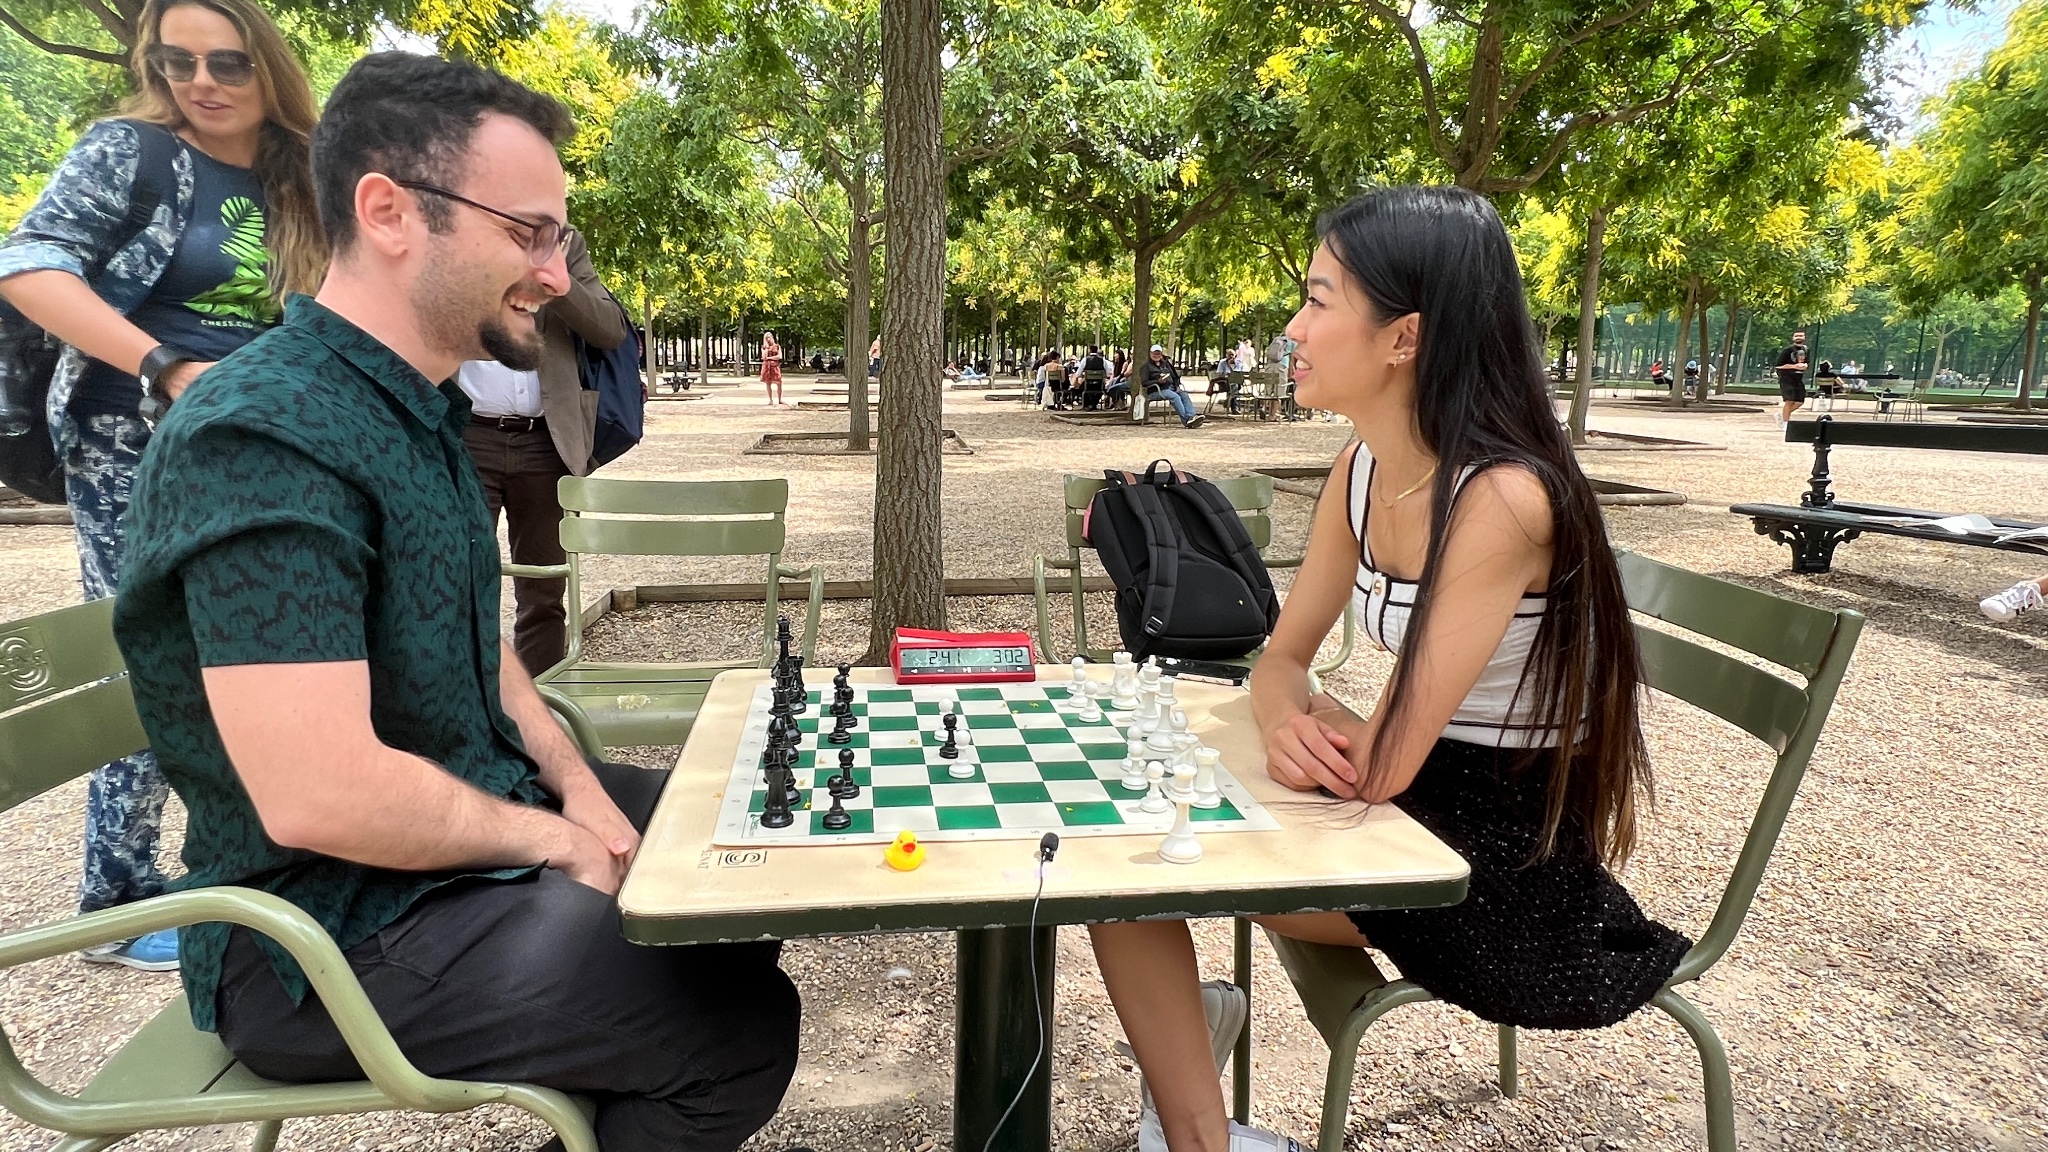 Kensington FIDE Rapid Chess - by Adam Raoof